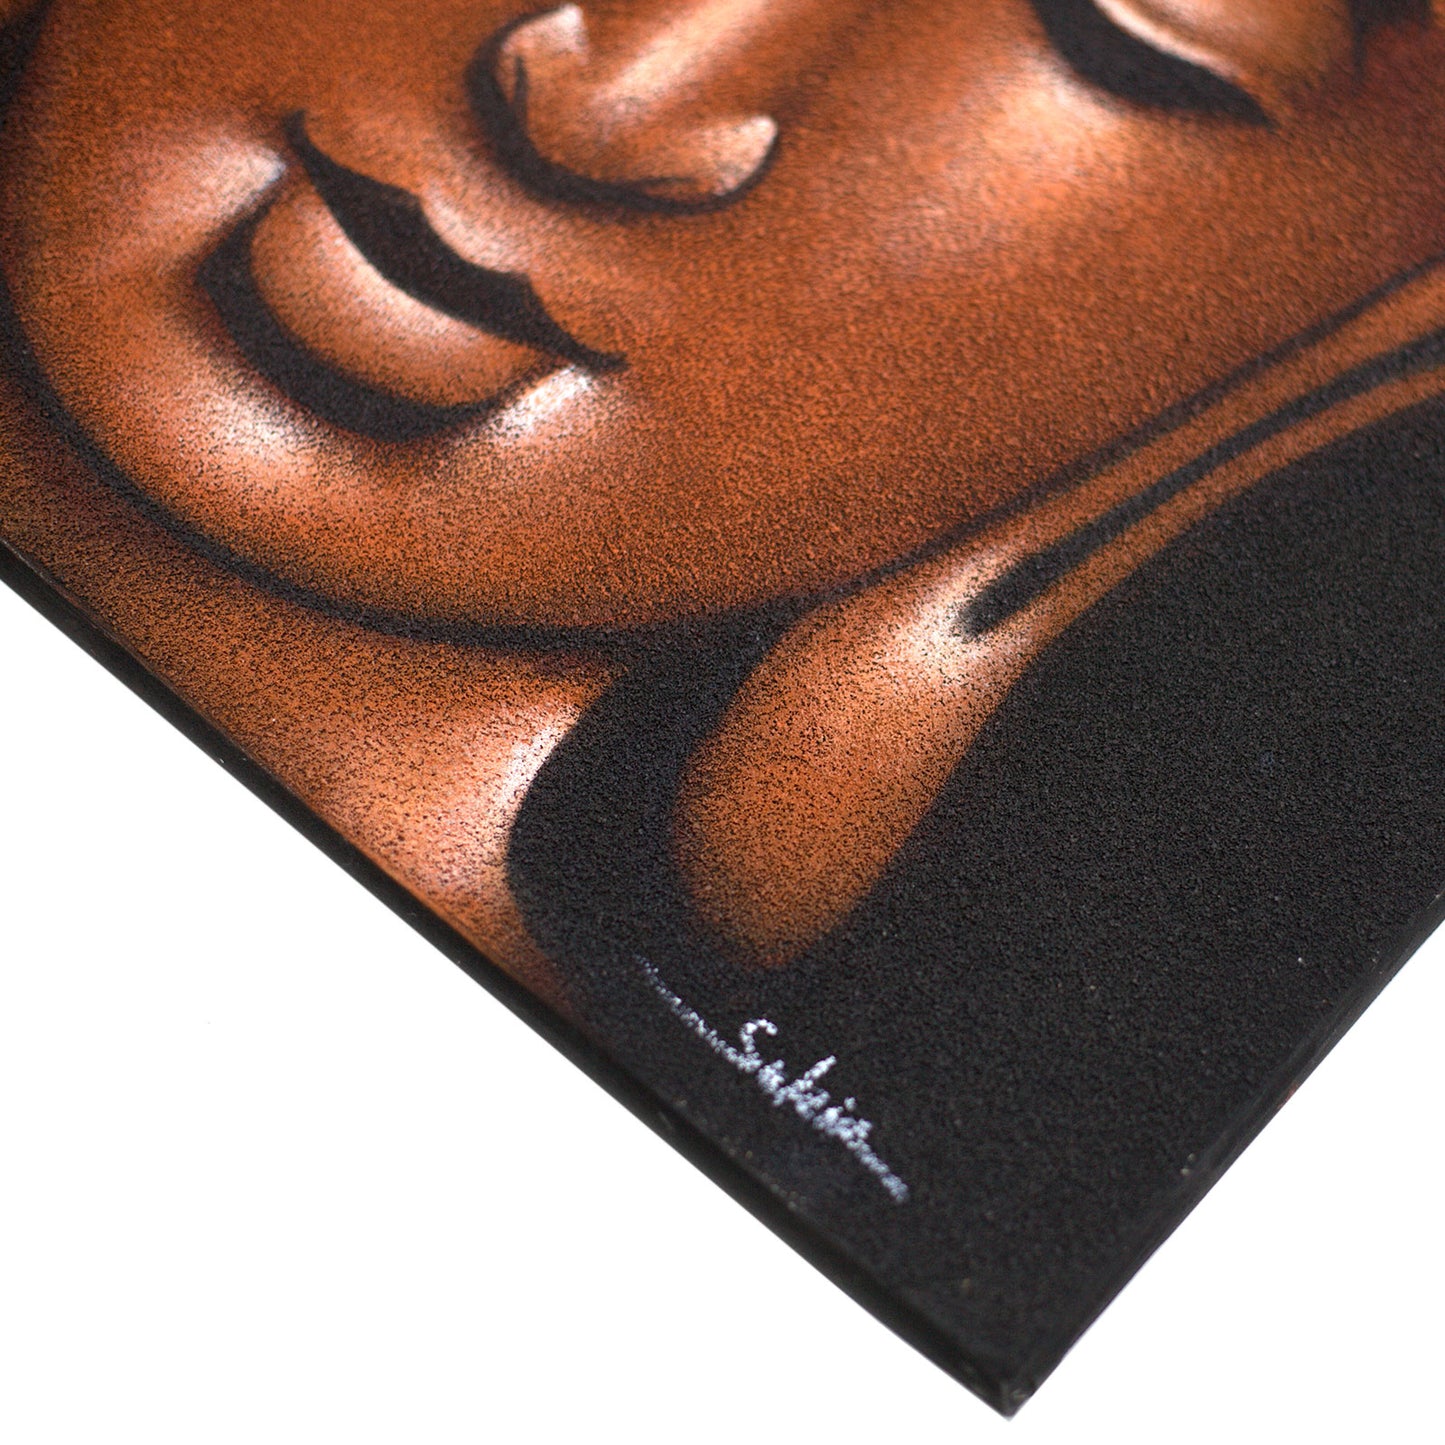 Buddha Painting - Copper Sand Finish